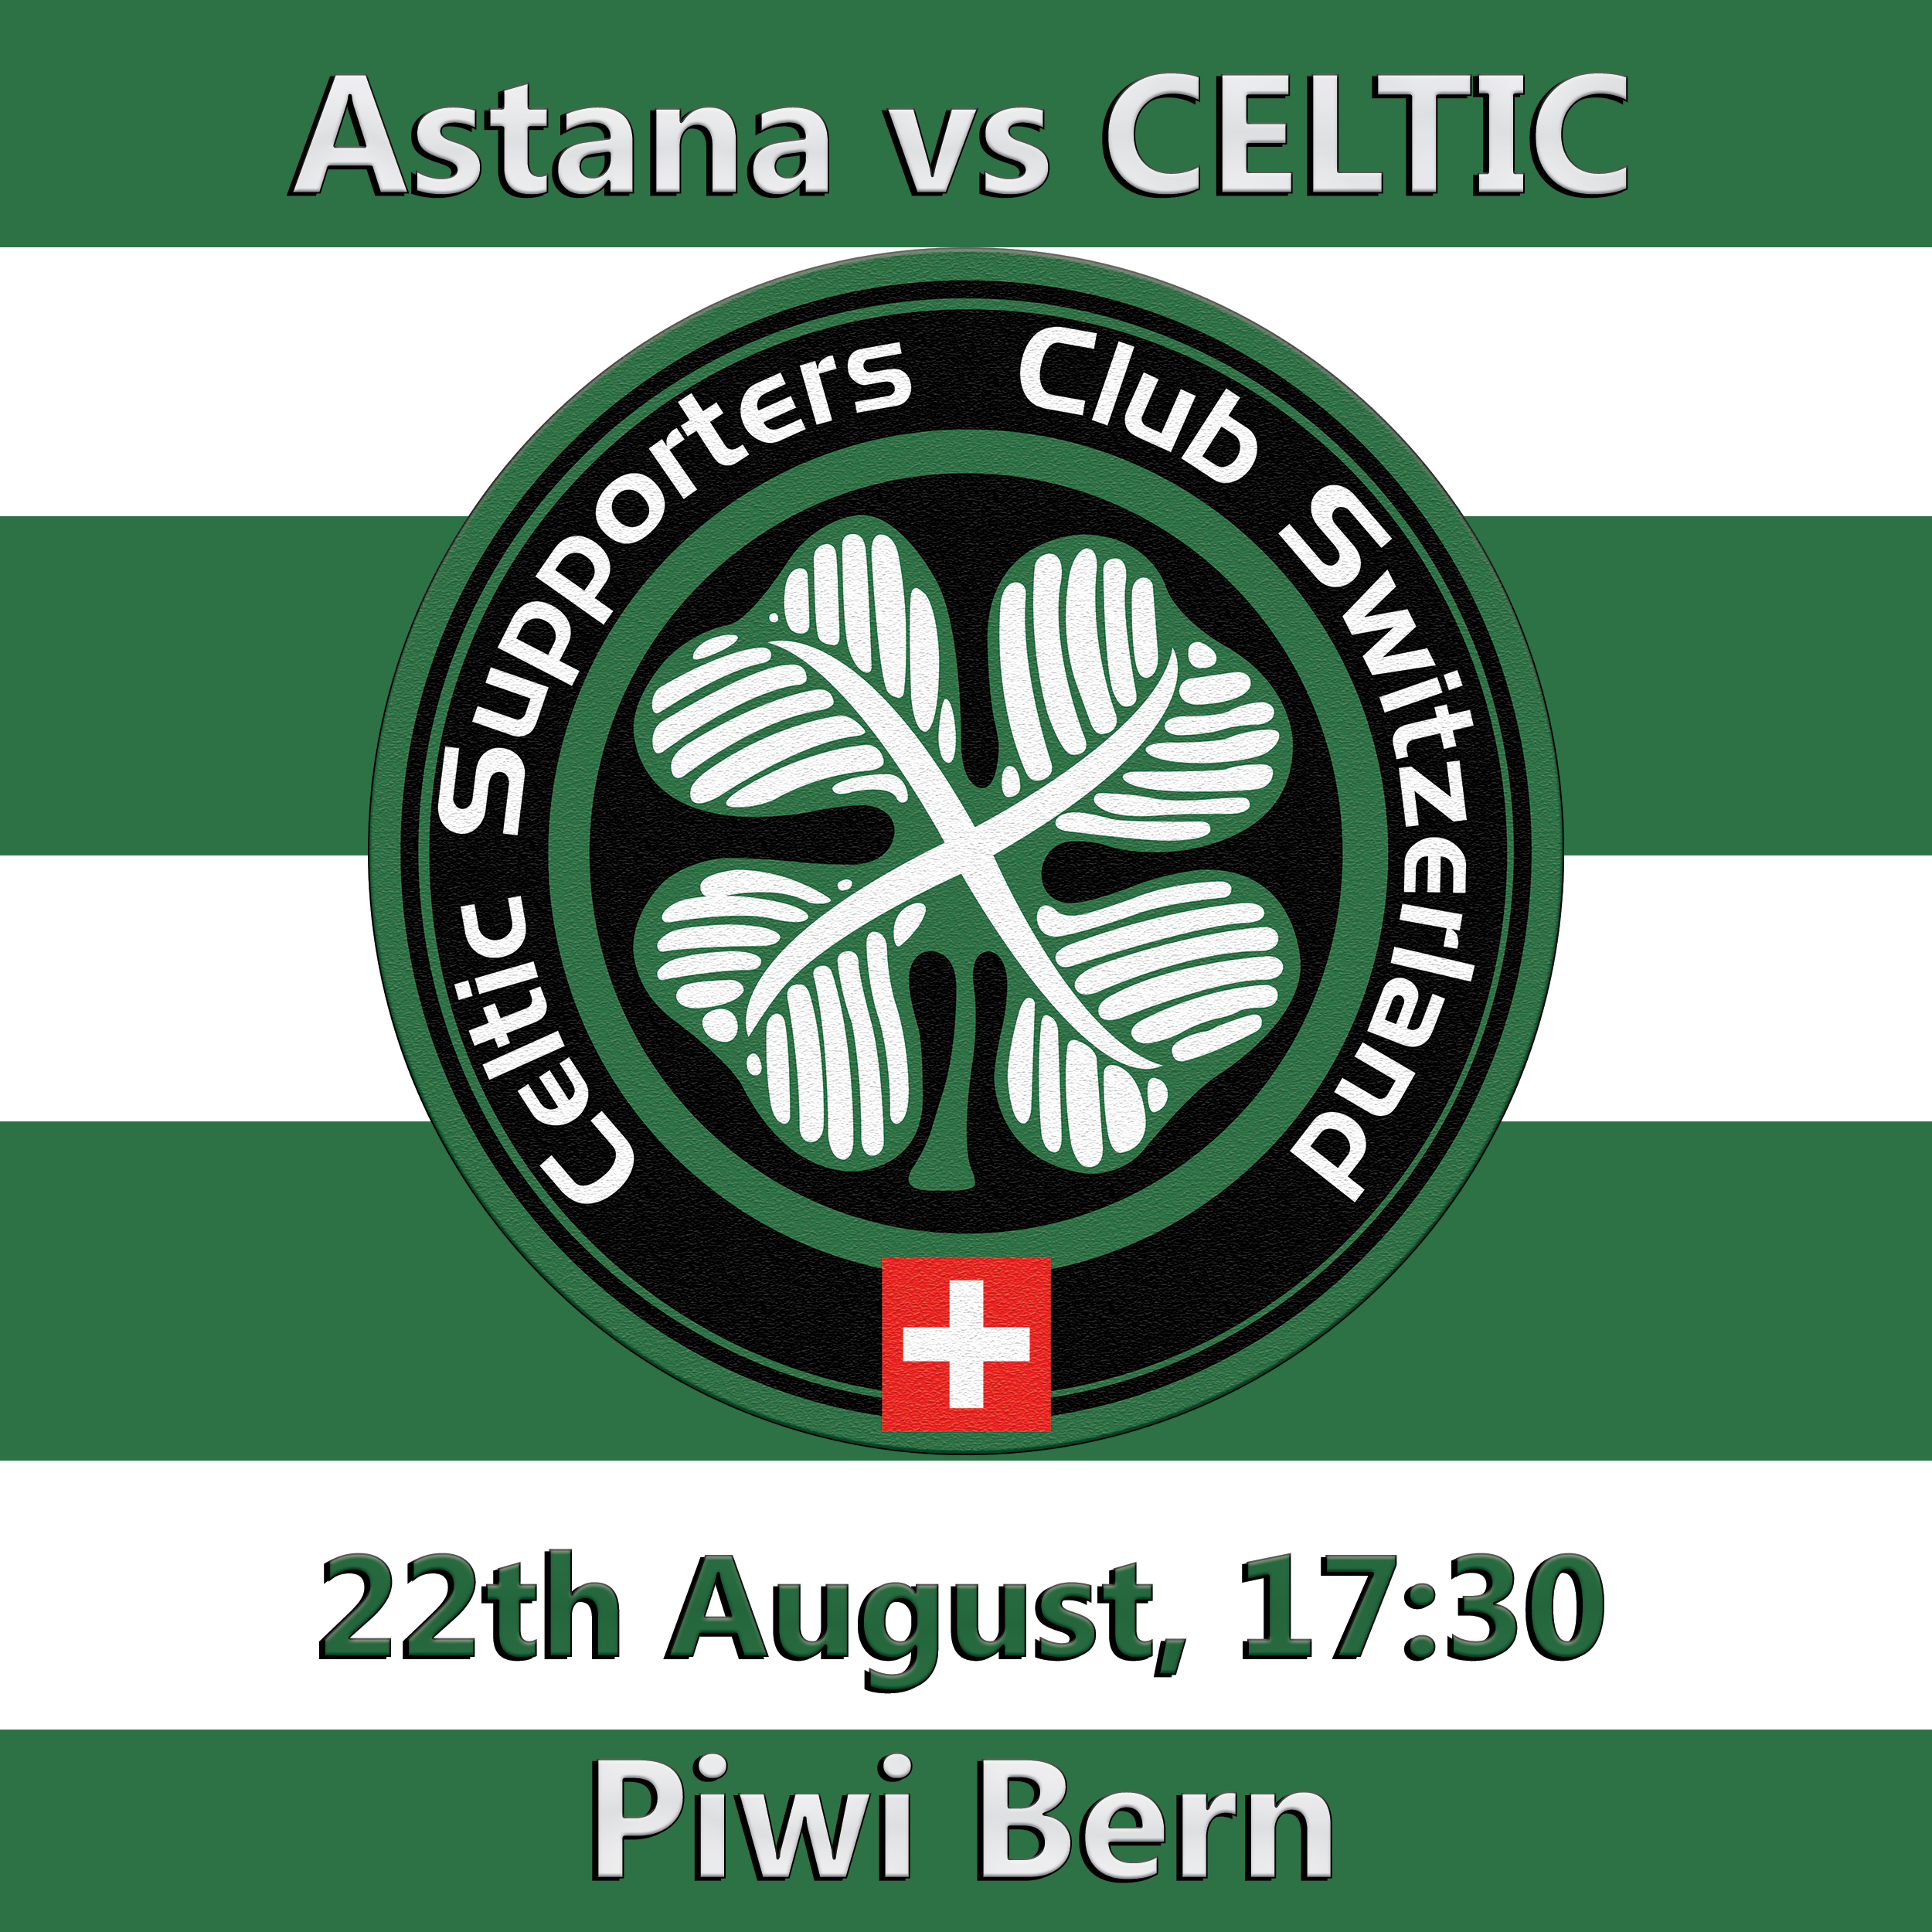 Astana-Celtic in Piwi Bern